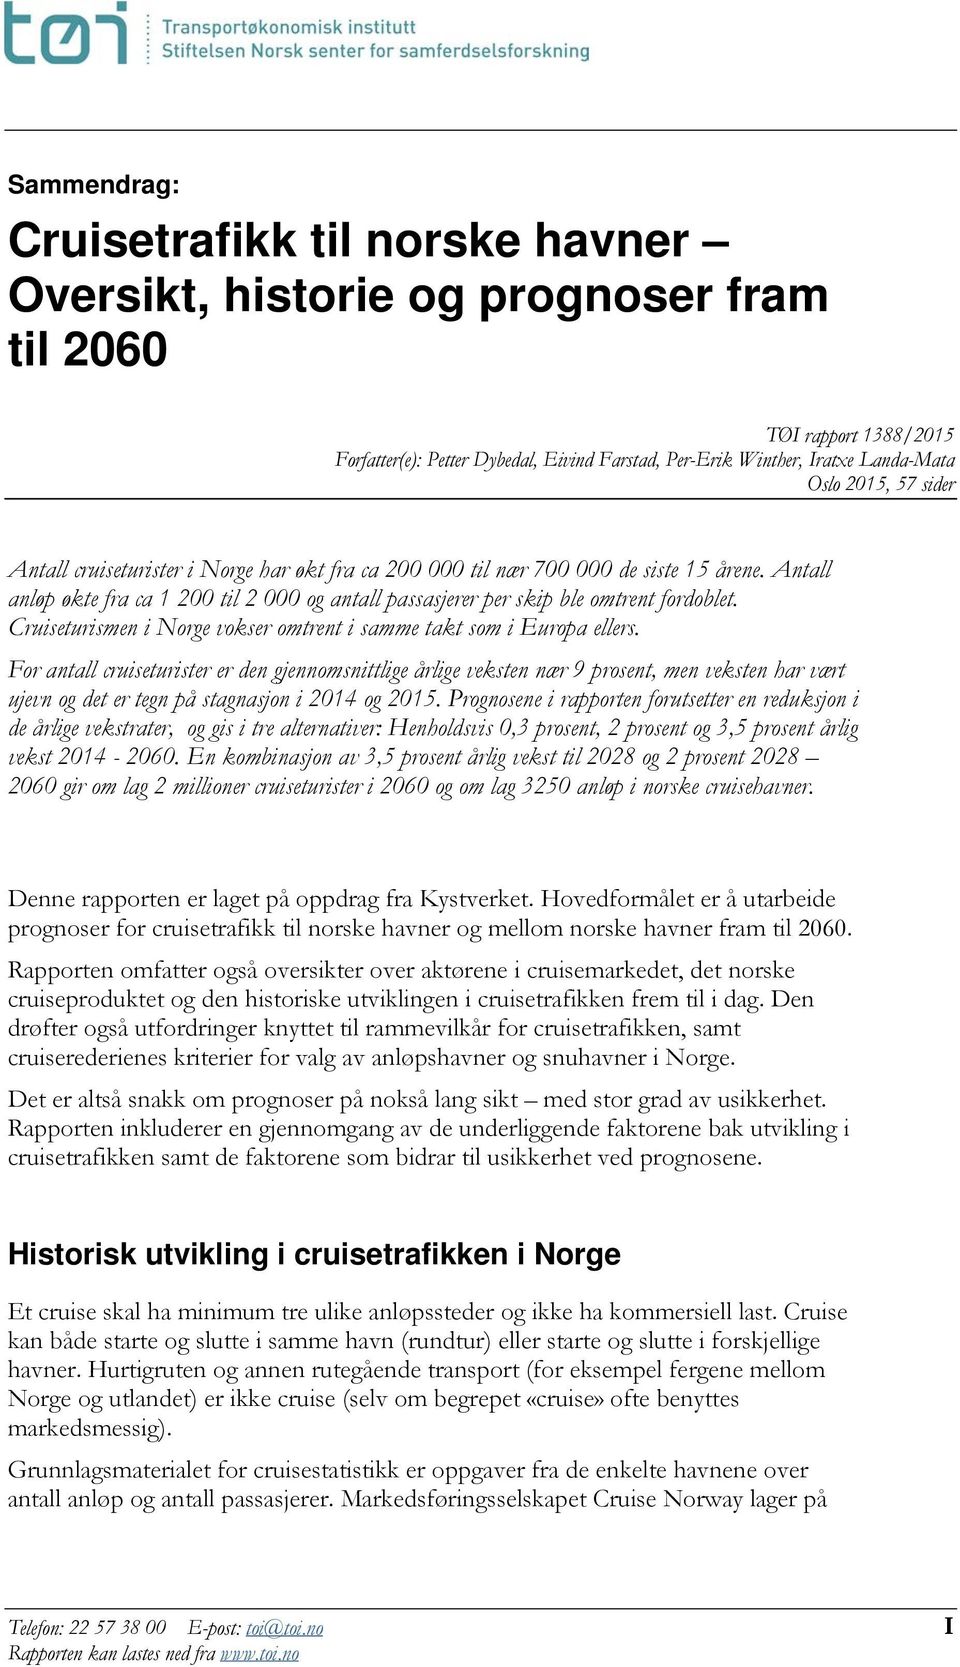 Cruiseturismen i Norge vokser omtrent i samme takt som i Europa ellers.